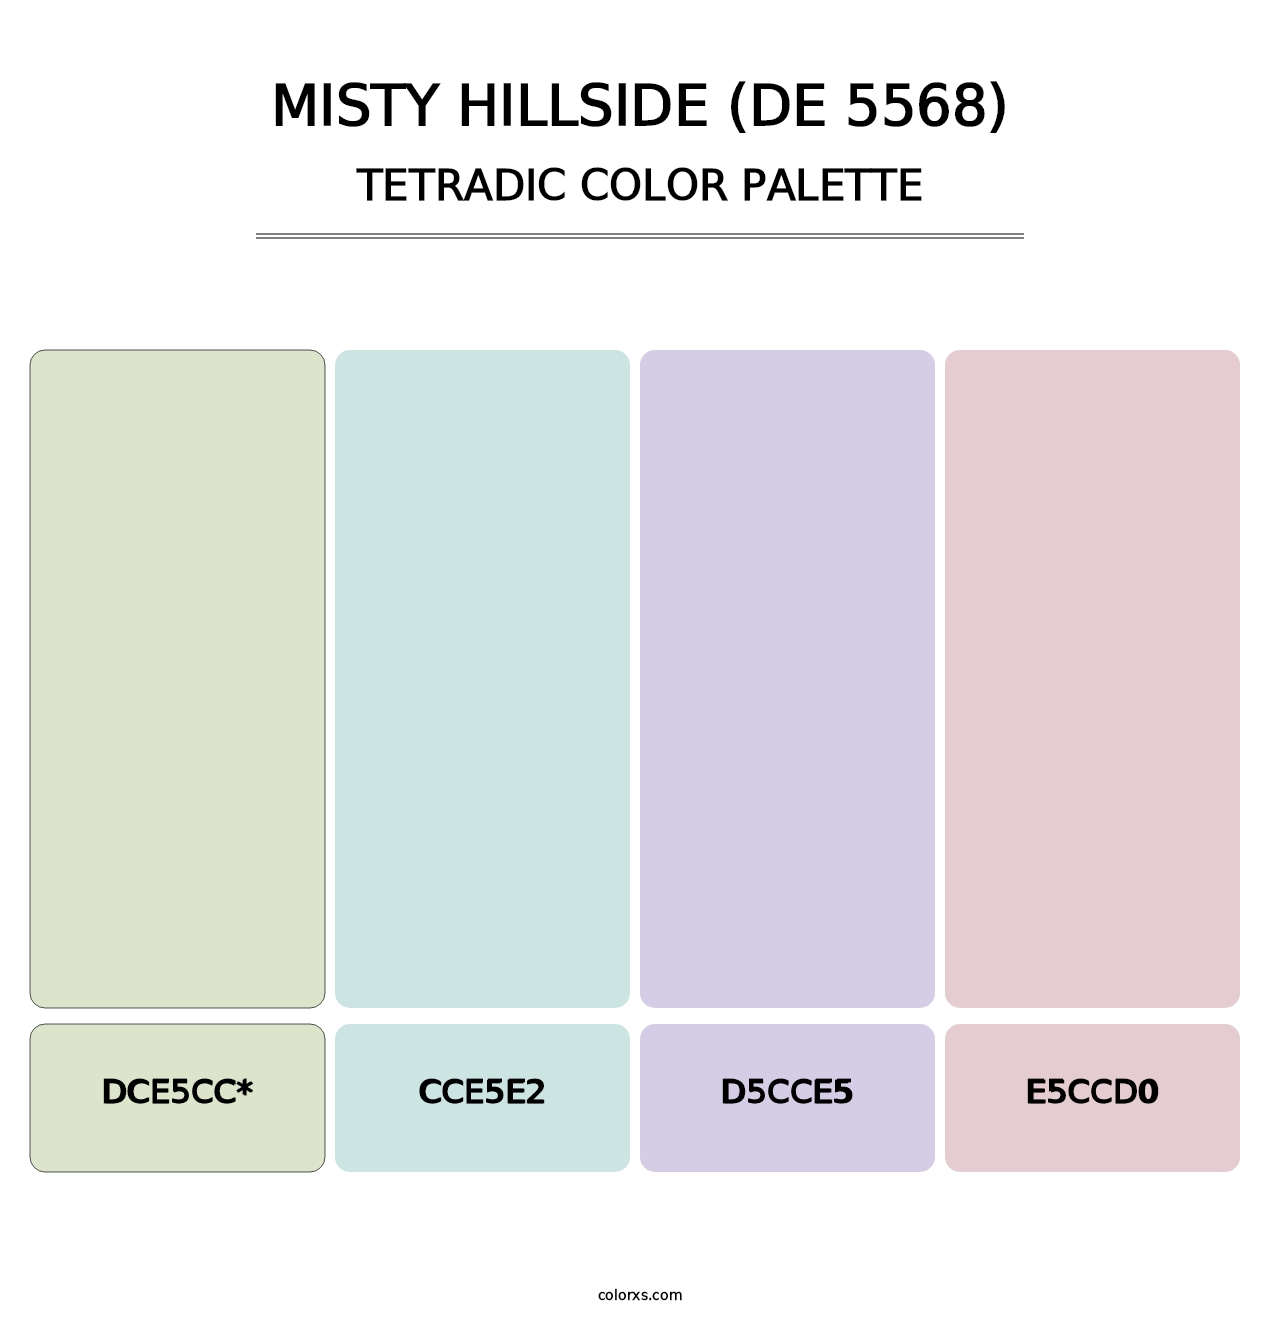 Misty Hillside (DE 5568) - Tetradic Color Palette